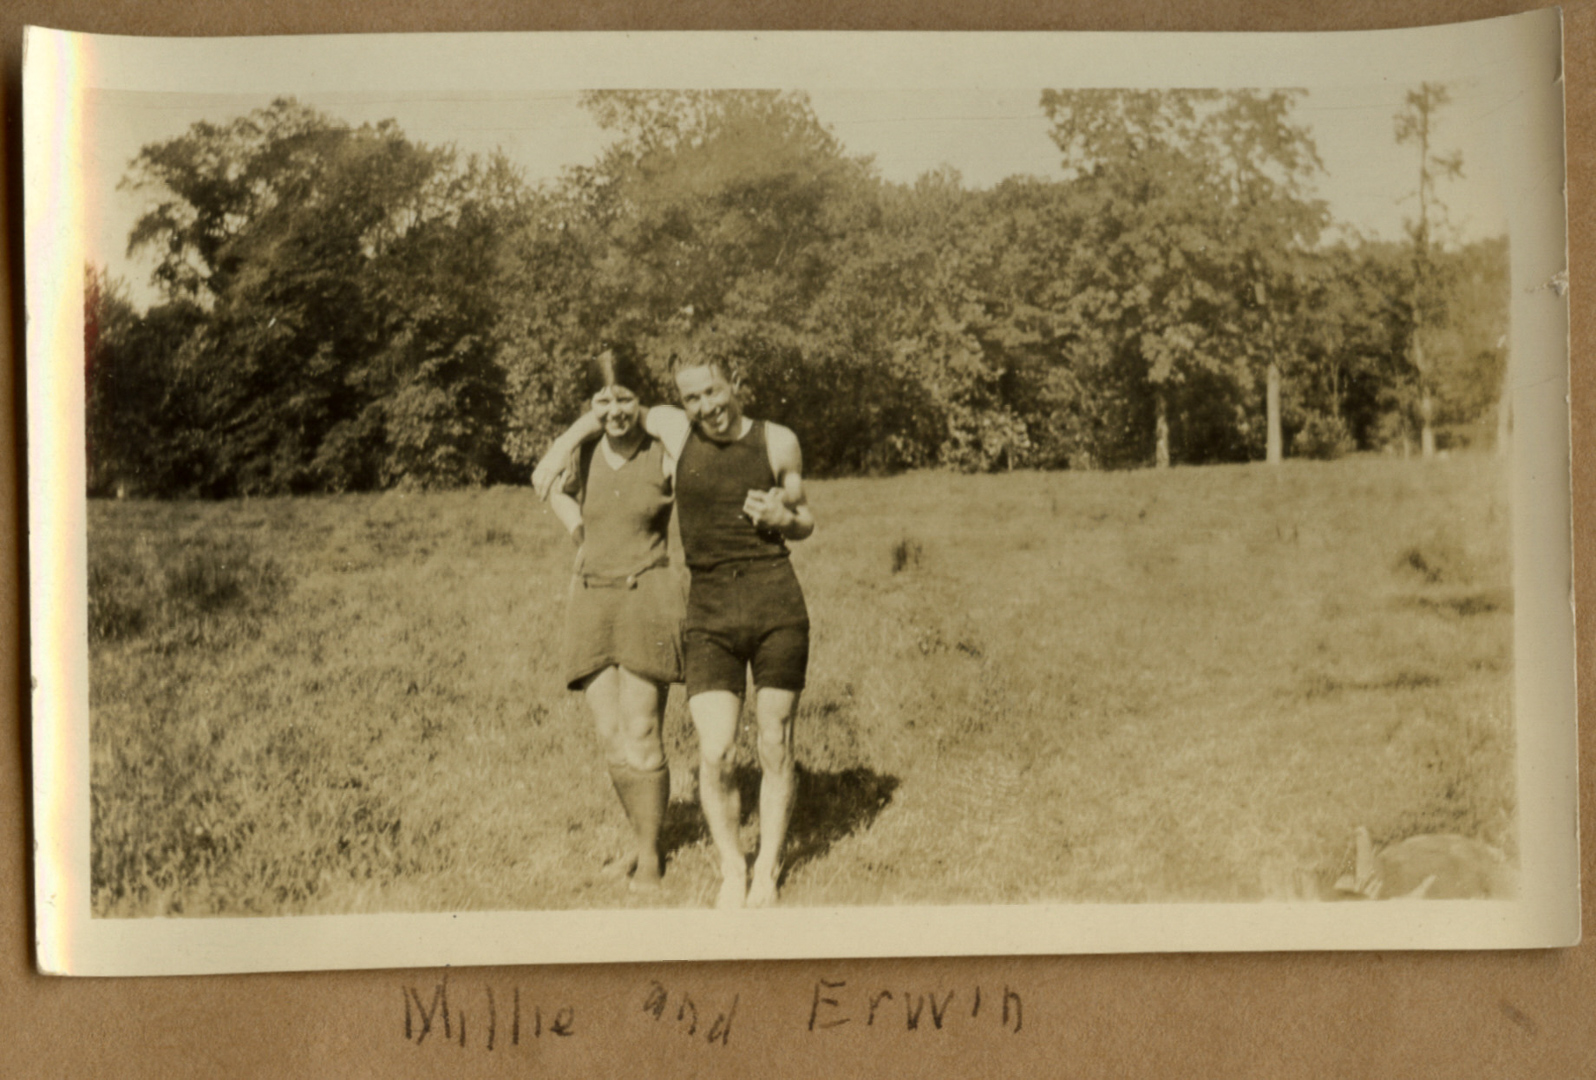 Millie & Erwin